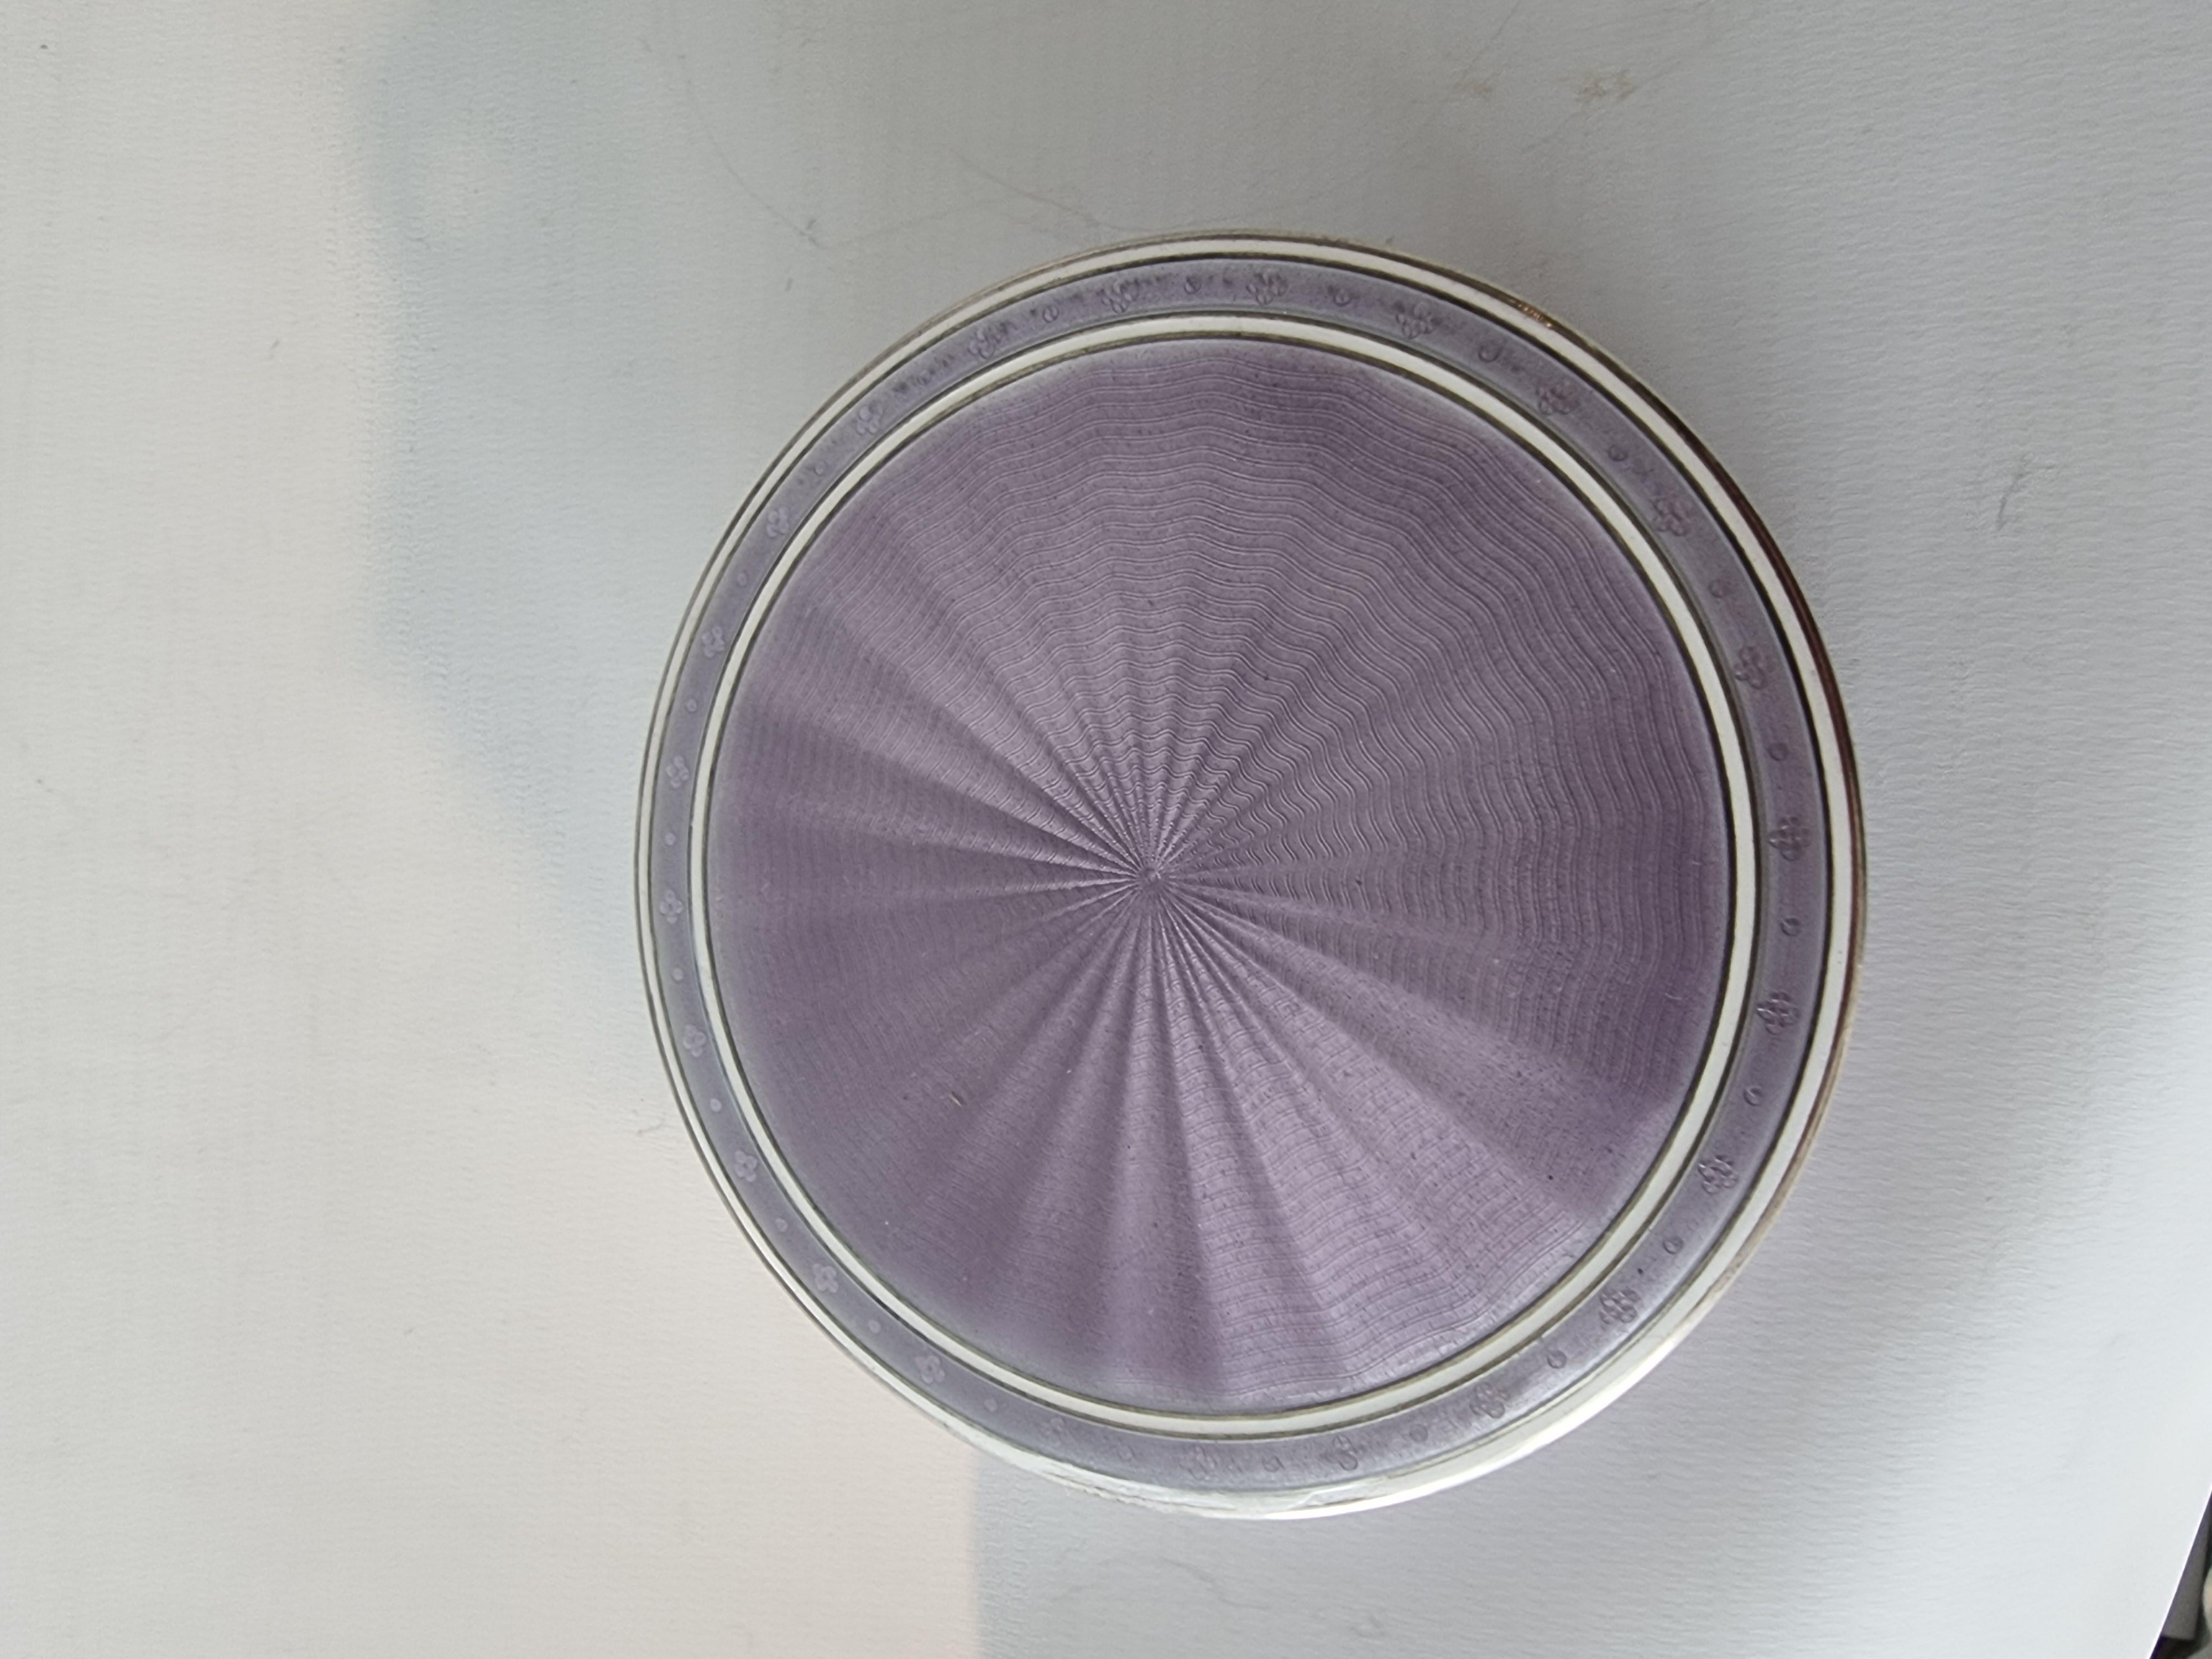 A very fine and pretty silver and purple guilloche enamel, with white enamel border, box. Interior is gilded.